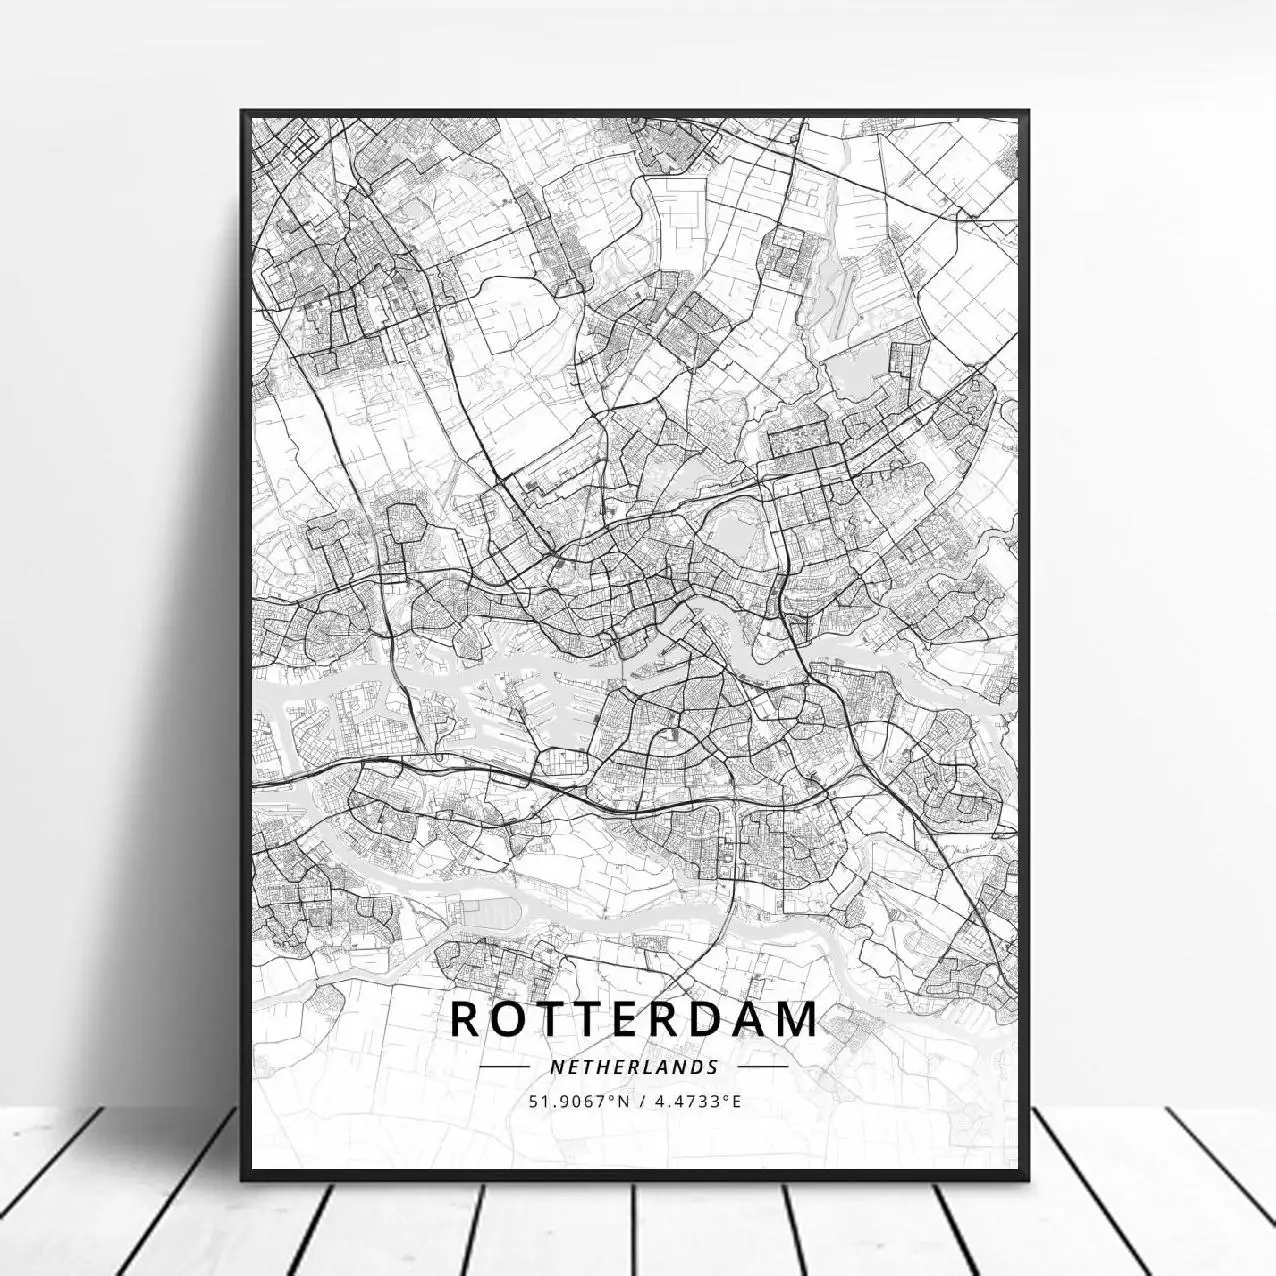 Hilversum Fijnaart бреда Эйндховен Роттердам Delft Apeldoorn карта Нидерландов плакат